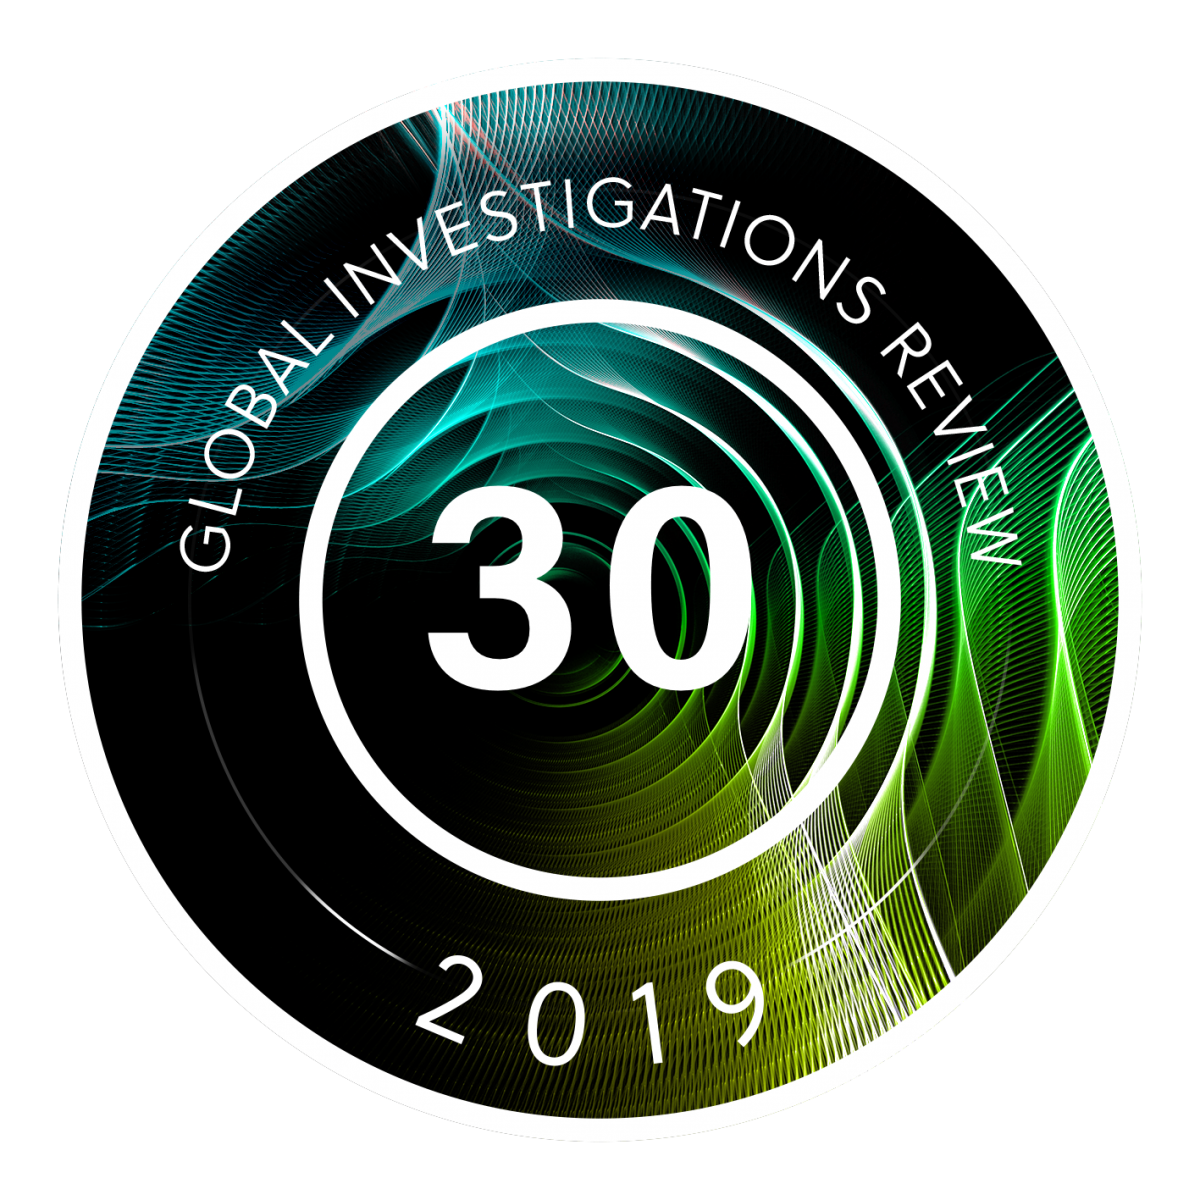 Global Investigations Review GIR 30 2019 badge